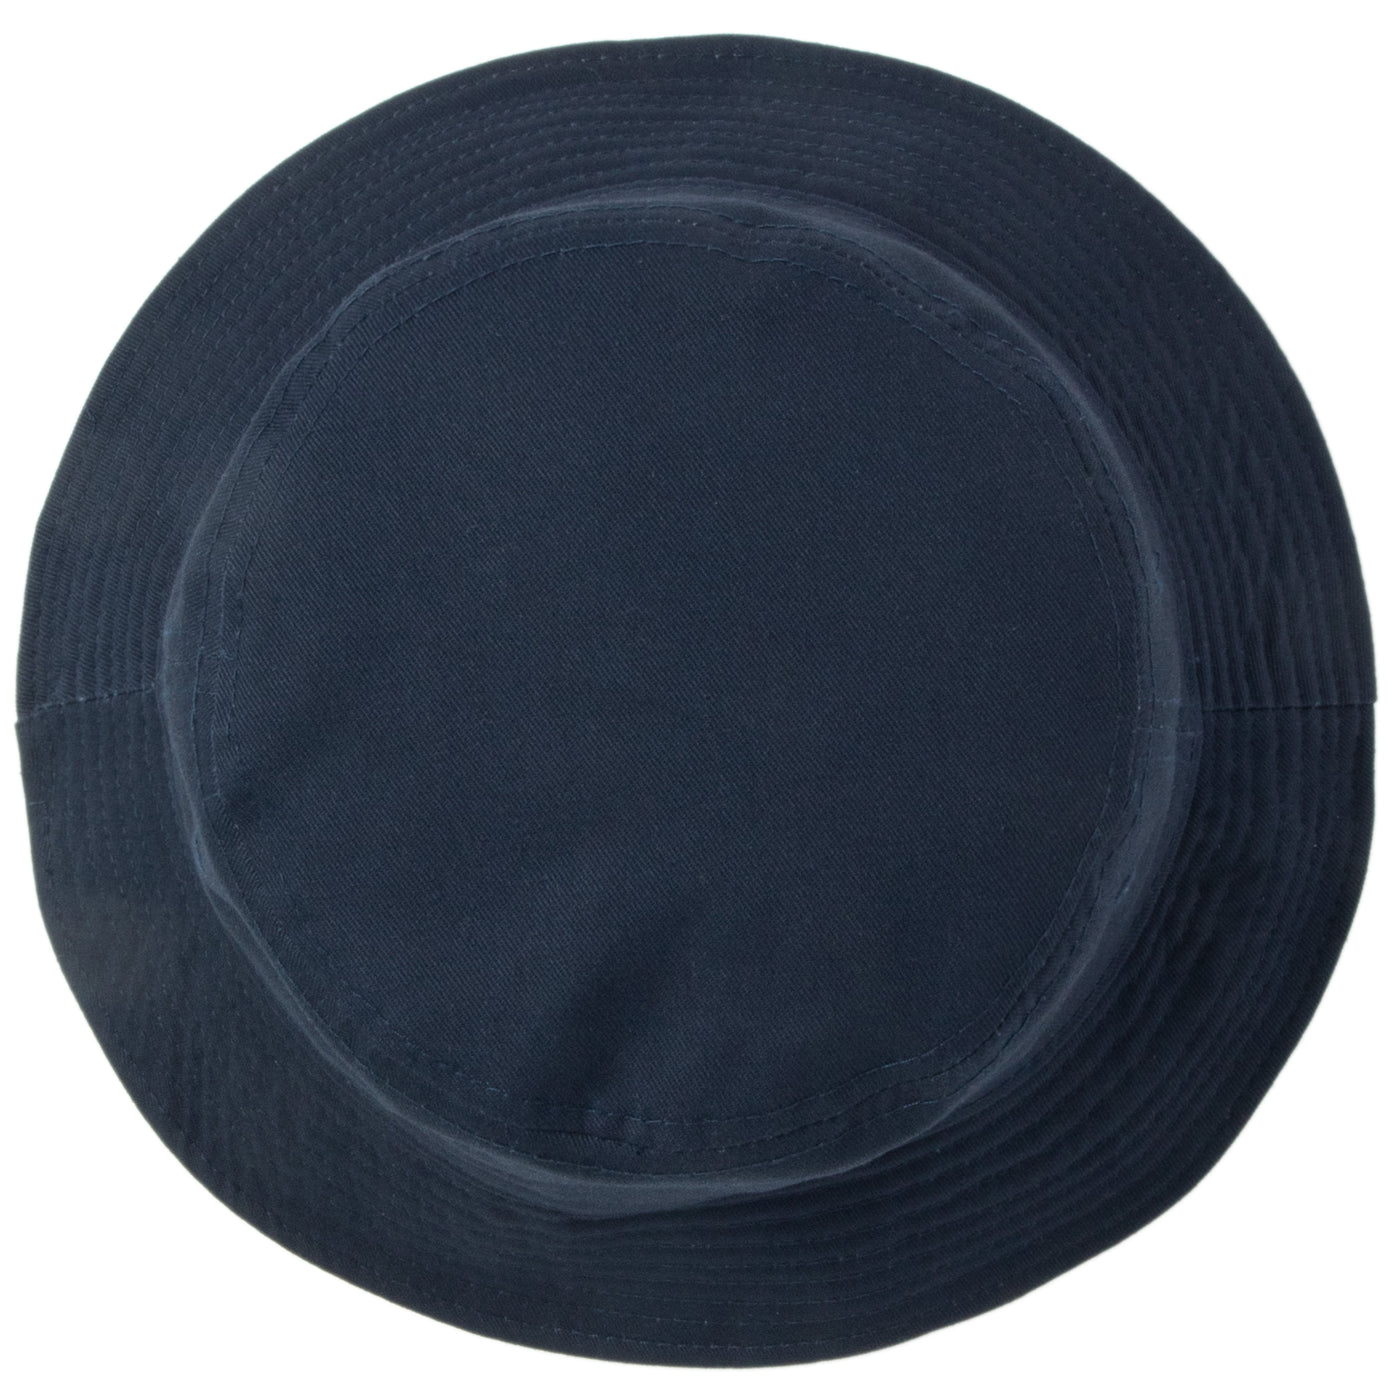 Hang Ten - Solid Print Bucket Hat-BUCKET-San Diego Hat Company